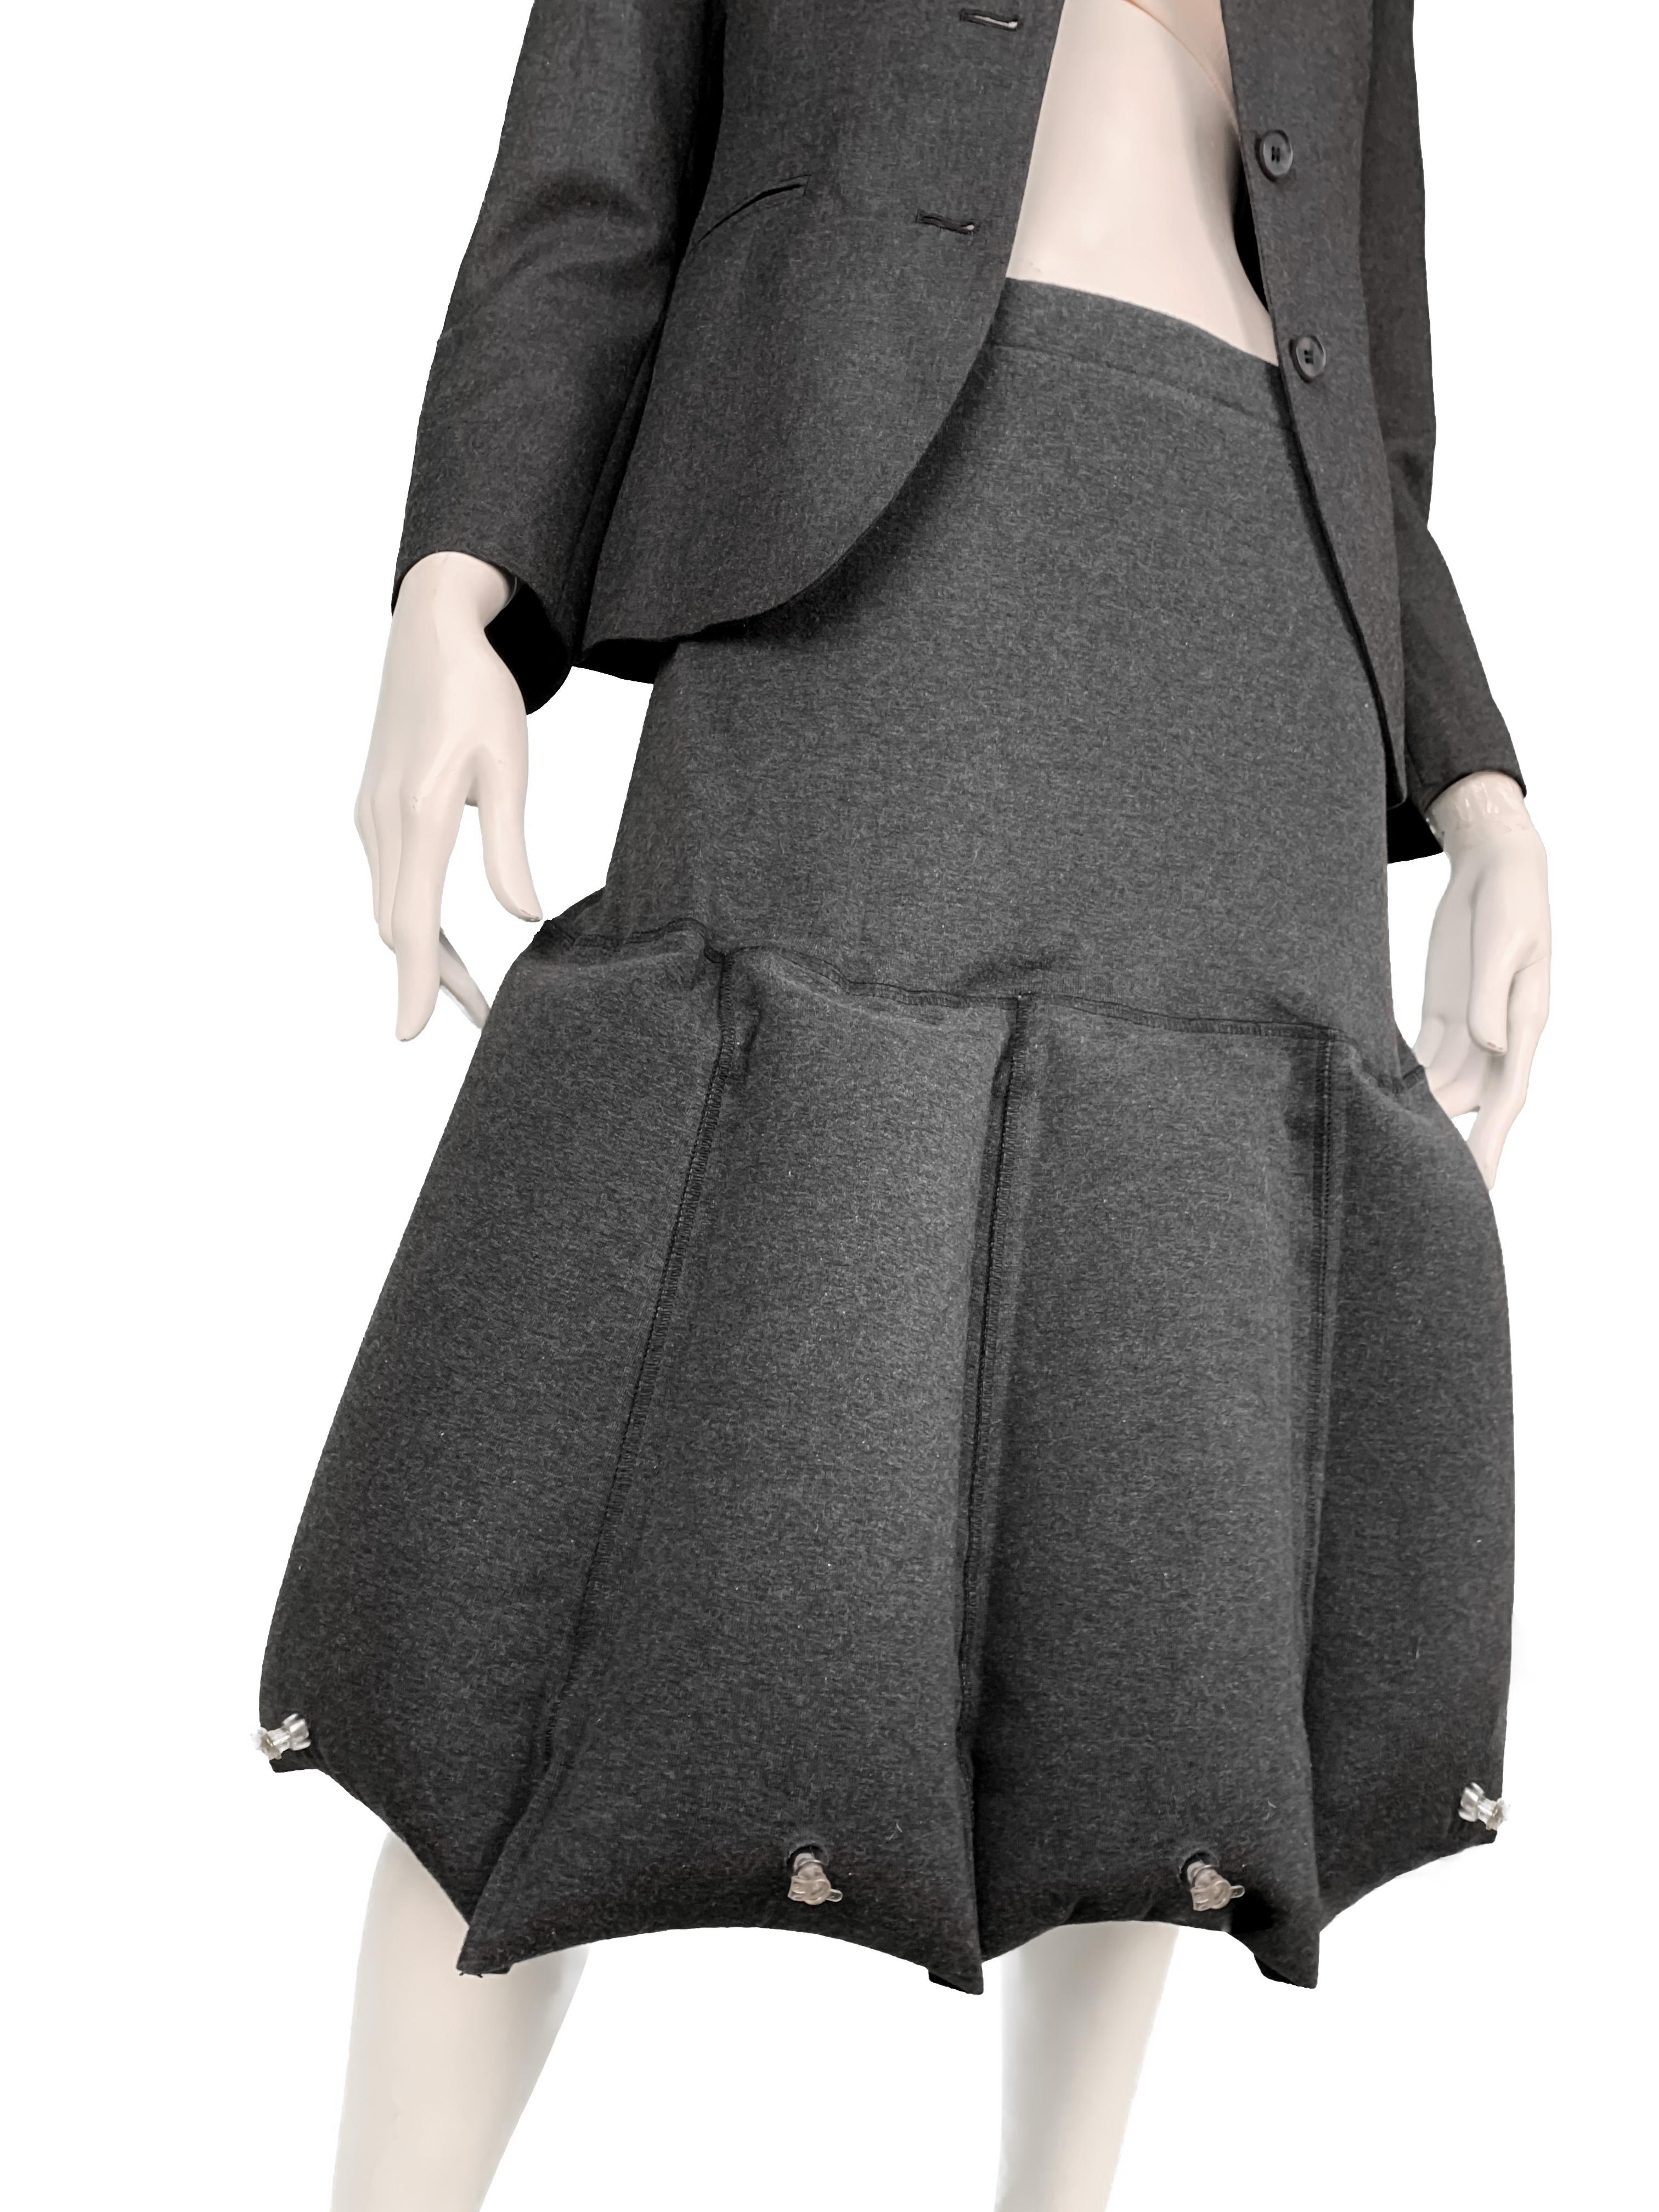 Issey Miyake A/W 2000 Runway Inflatable Women's Wool Blazer & Skirt Suit 1